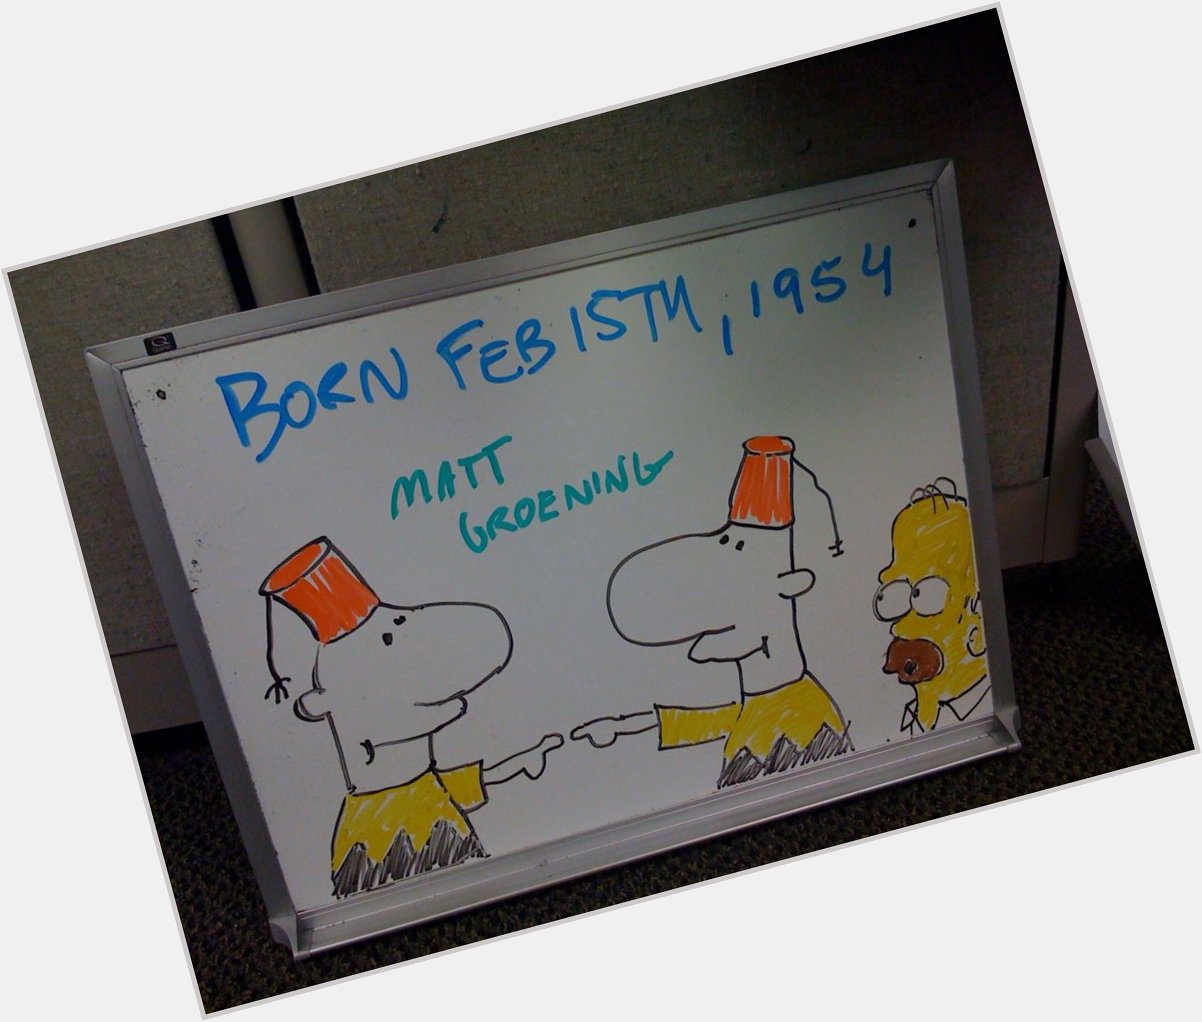 Happy birthday Matt Groening! 